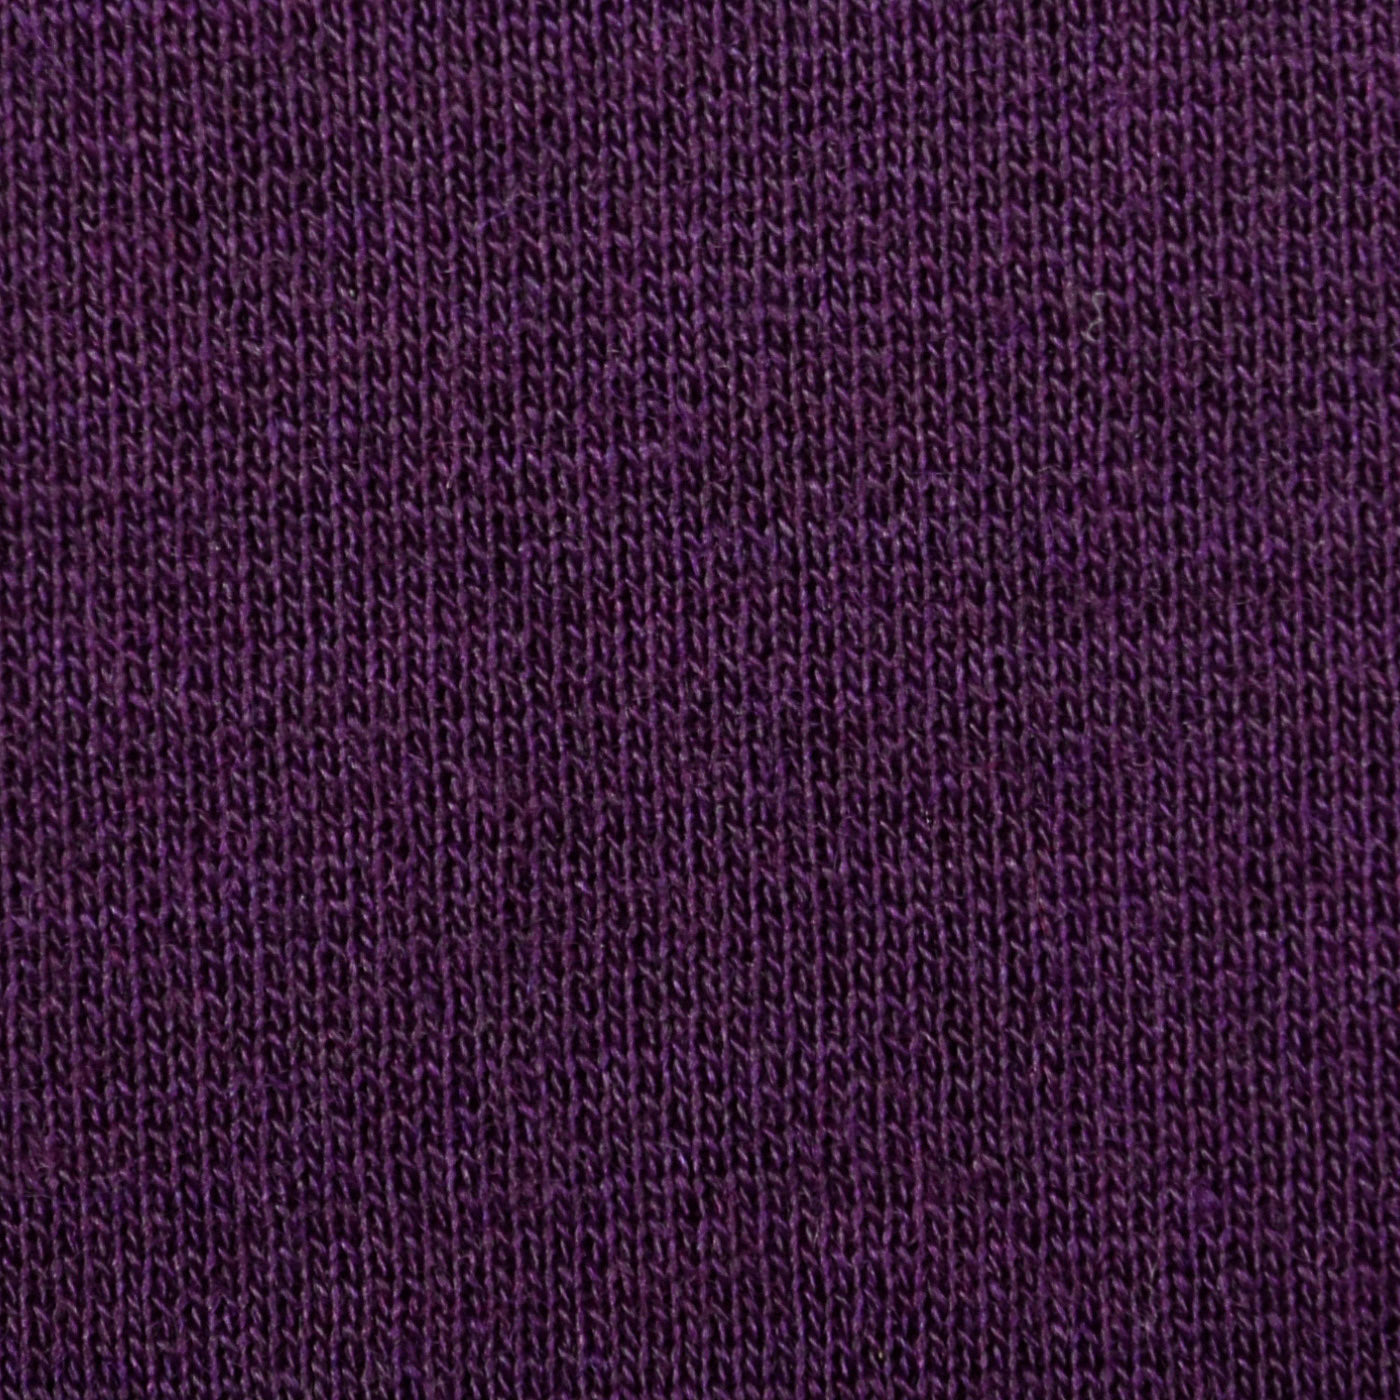 1960s Purple Knit Dress with Dropped Waist